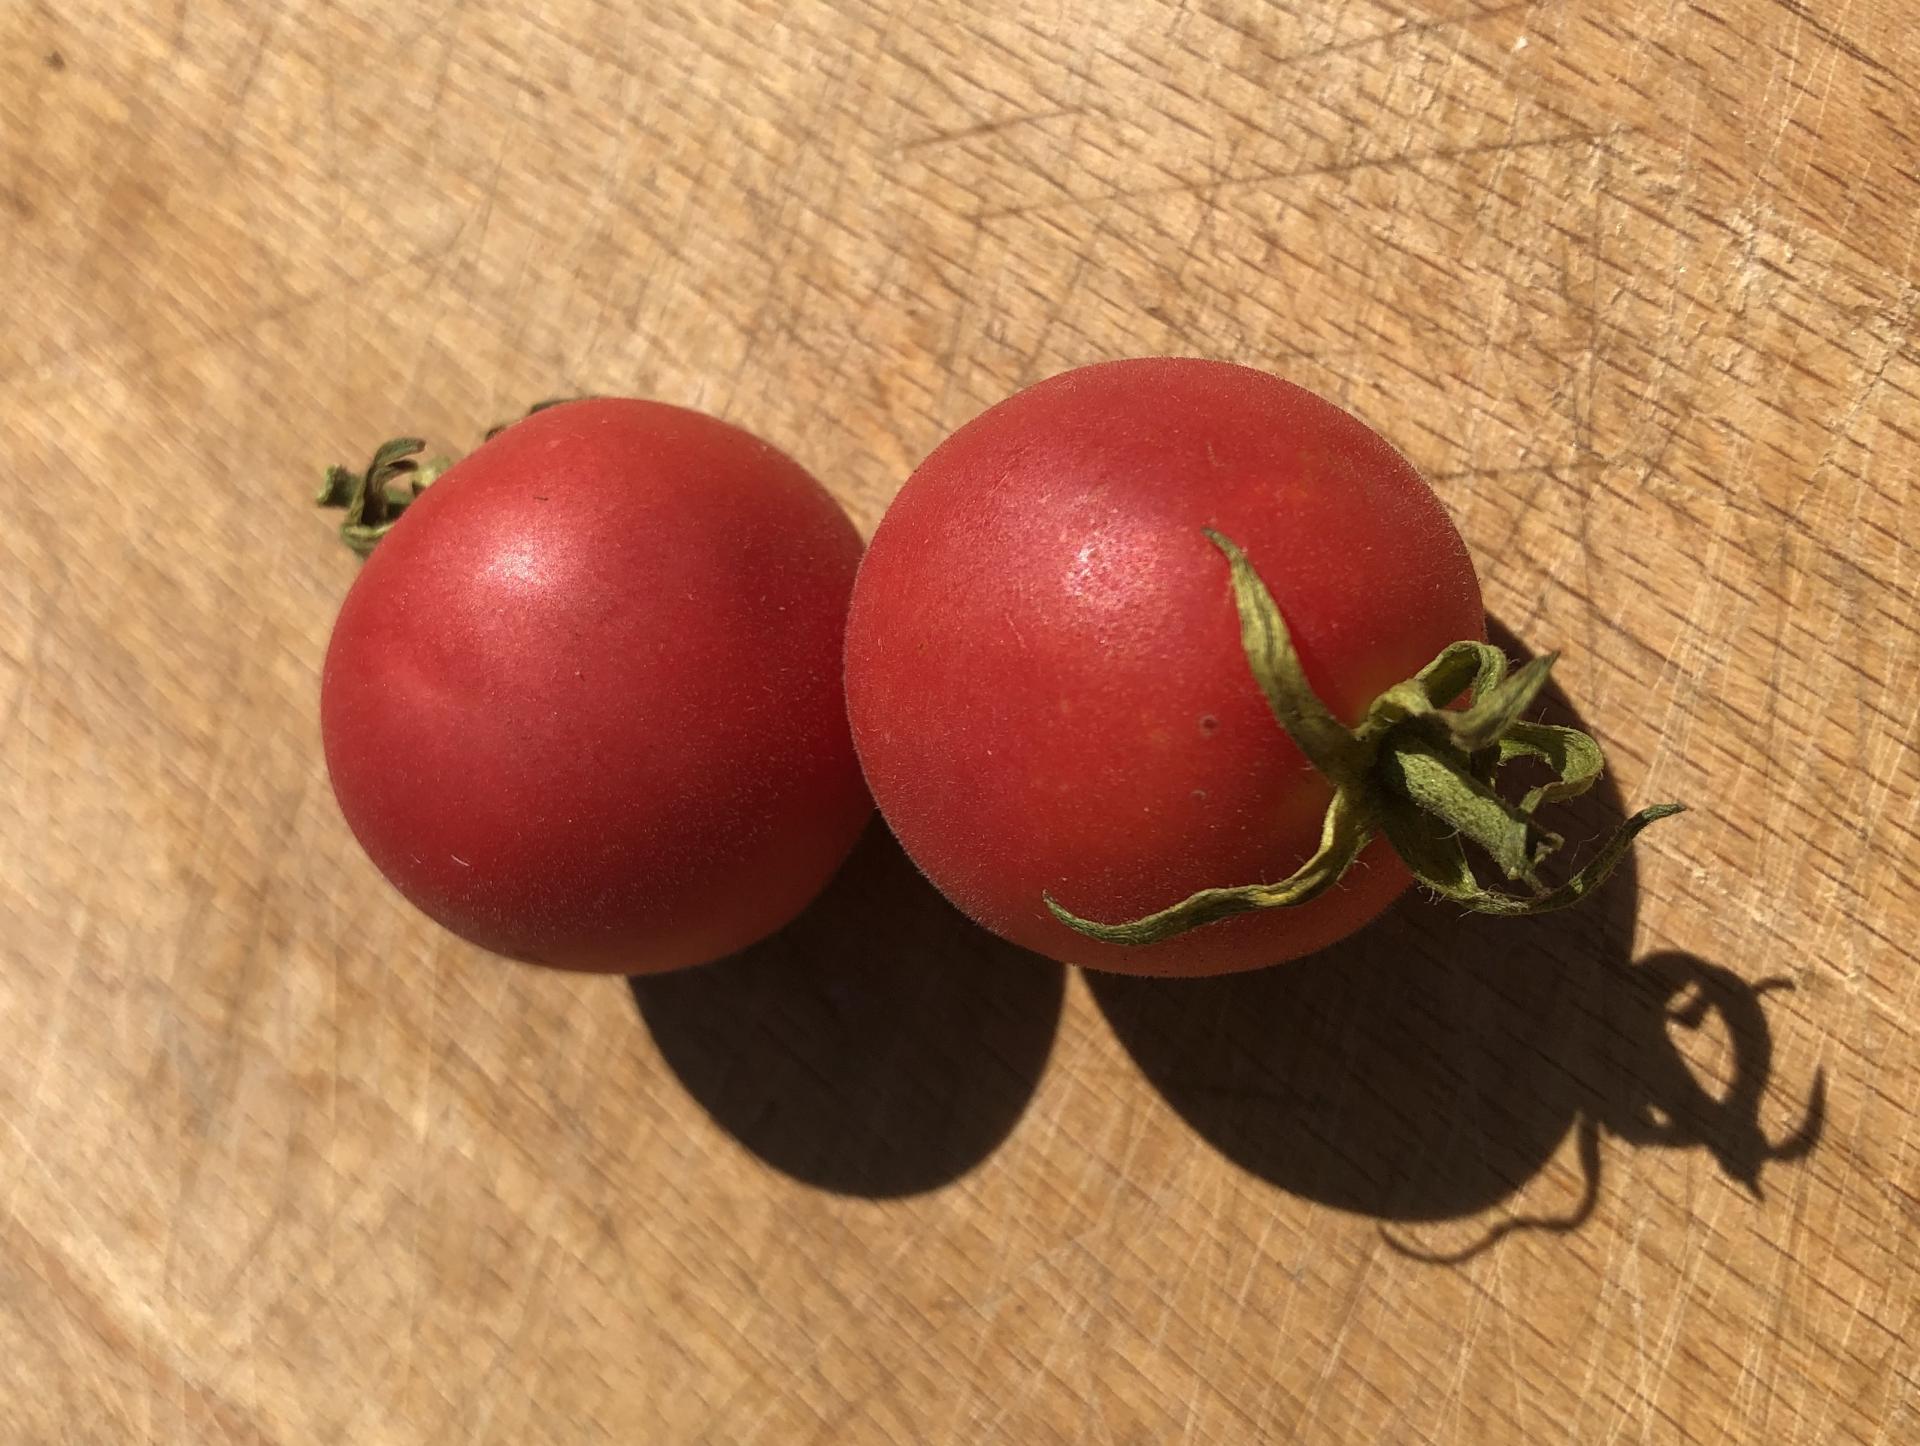 Graines tomate rose podlaki jardin des thorains 2